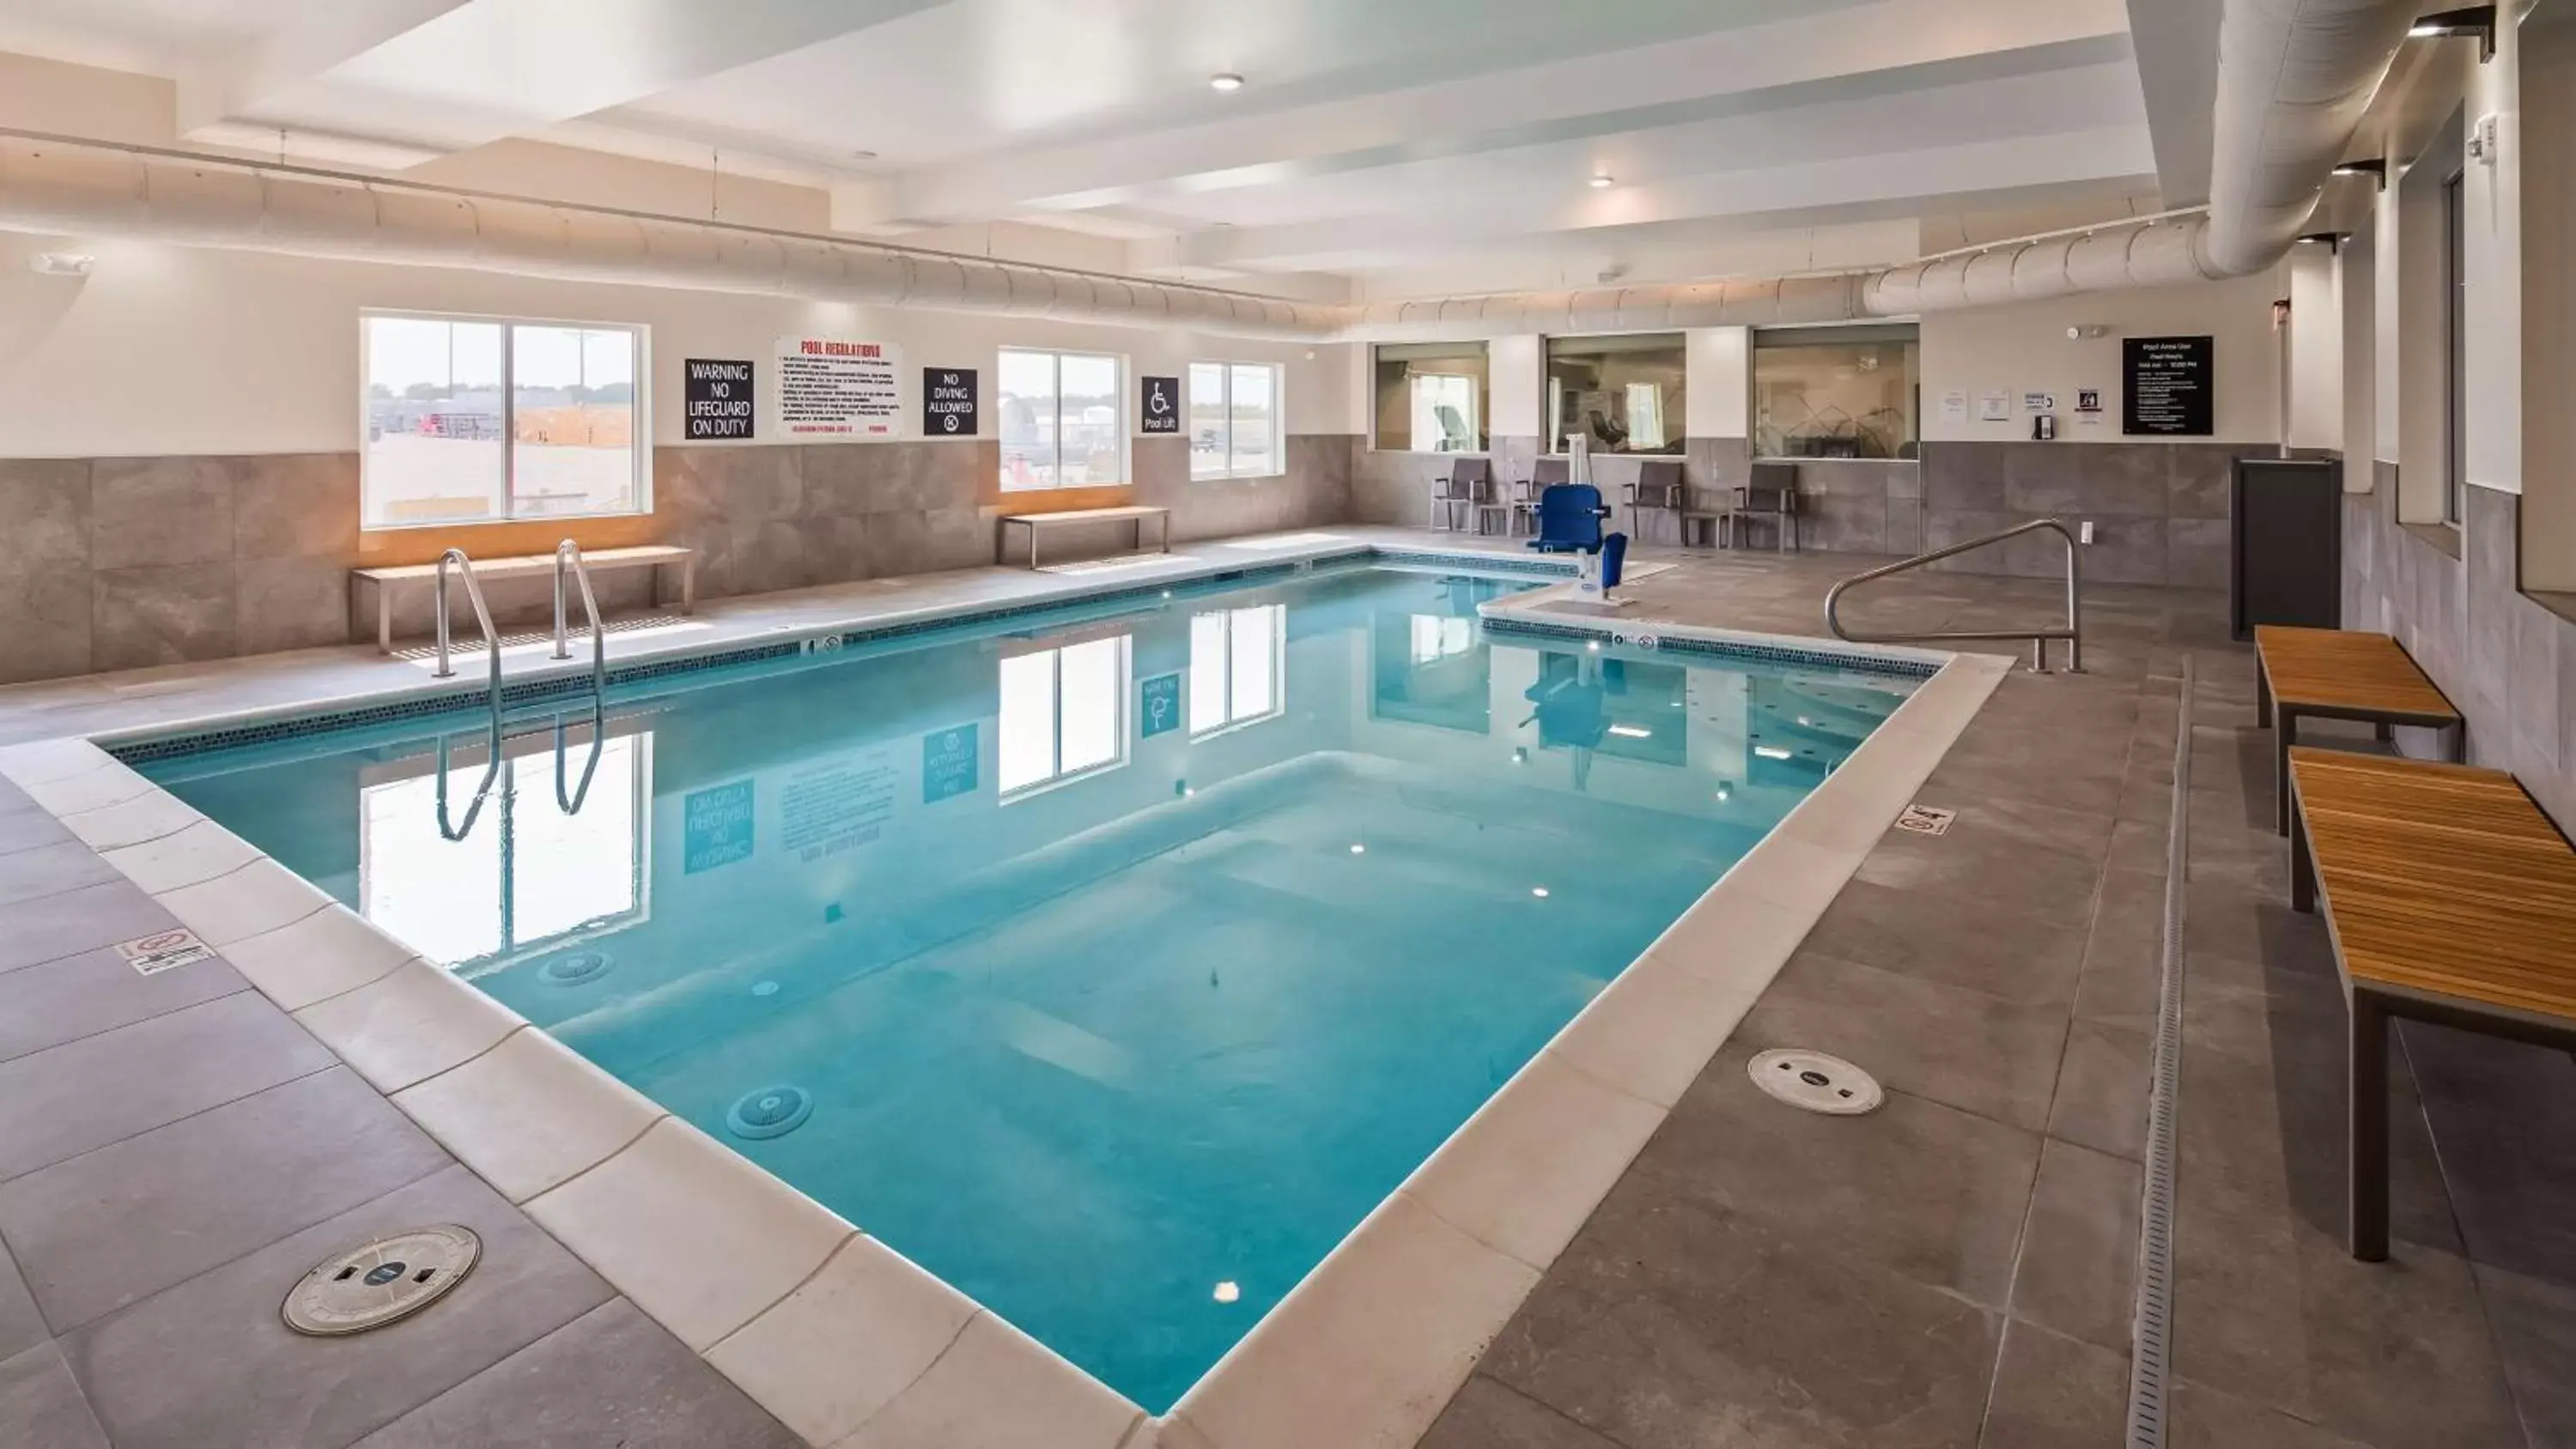 On site, Swimming Pool in Best Western Plus Ogallala Inn